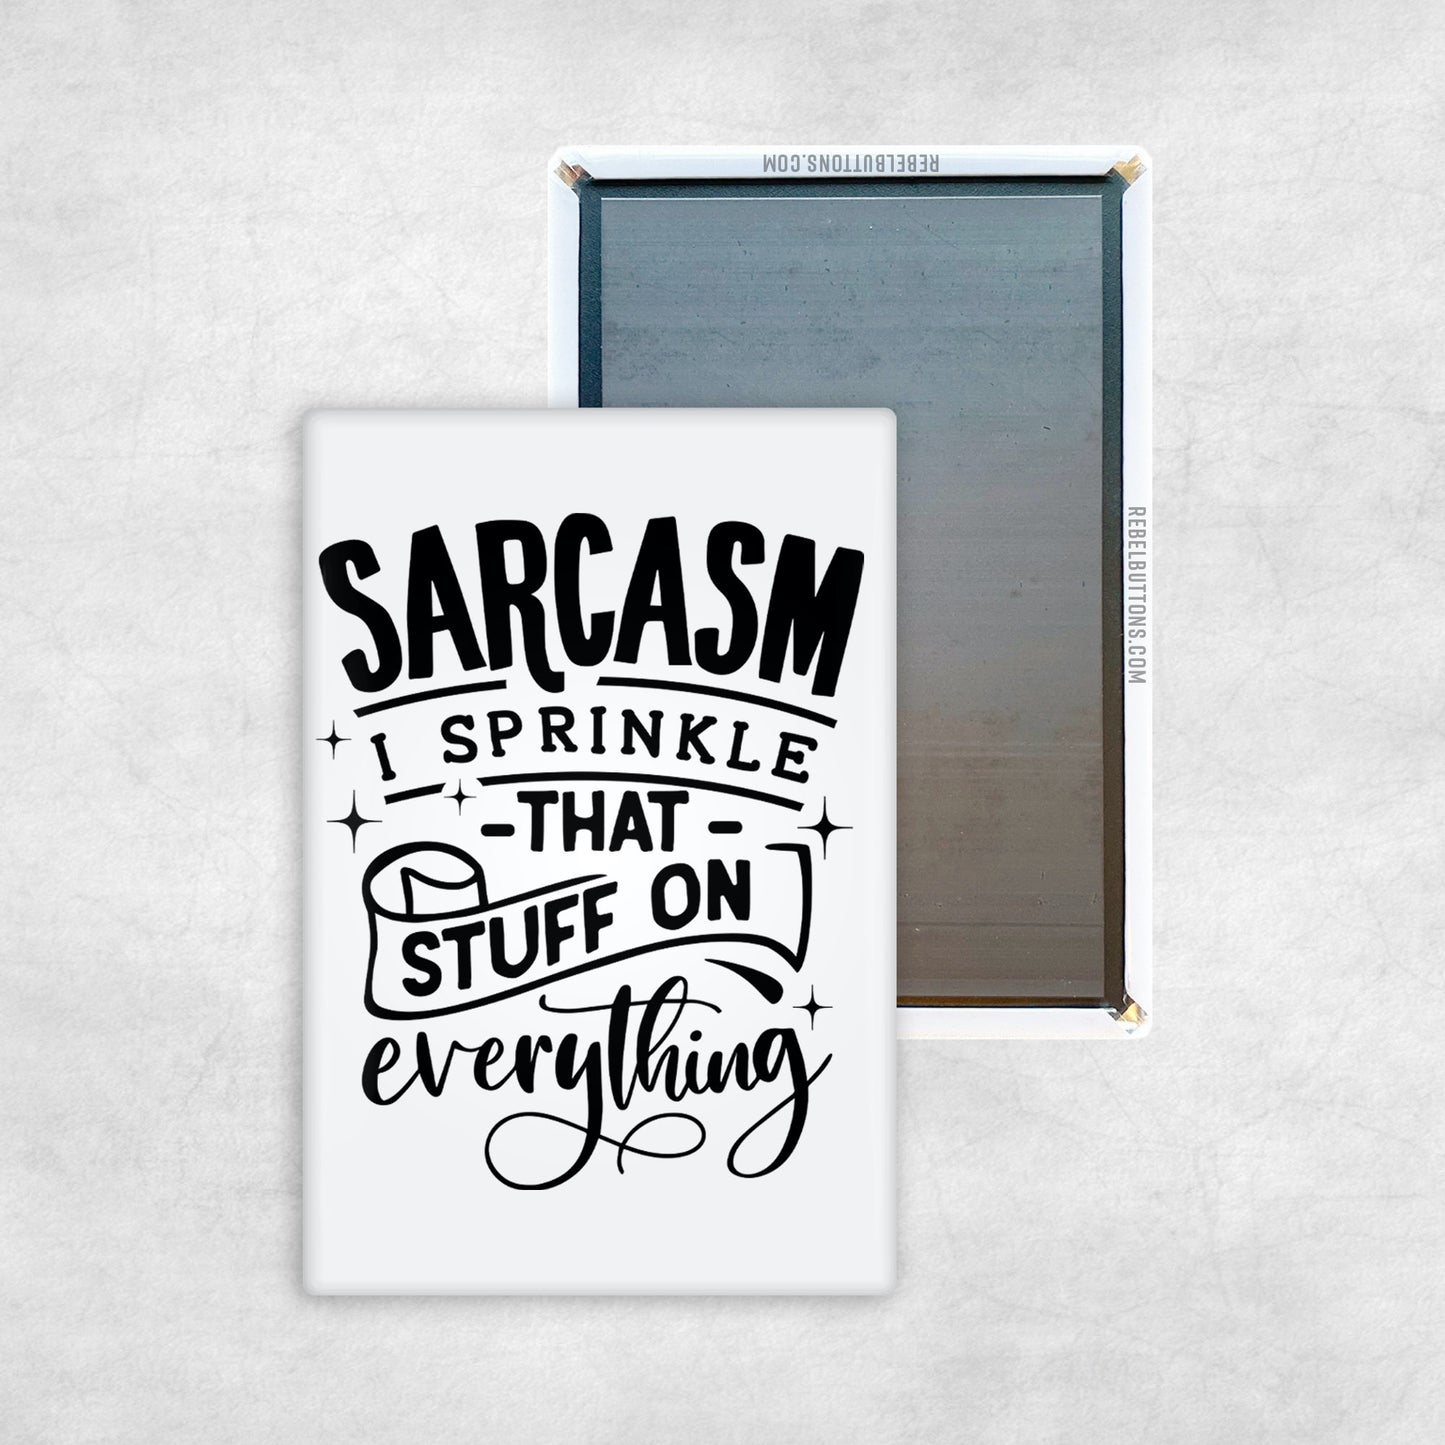 Sarcasm: I Sprinkle That Stuff On Everything Magnet